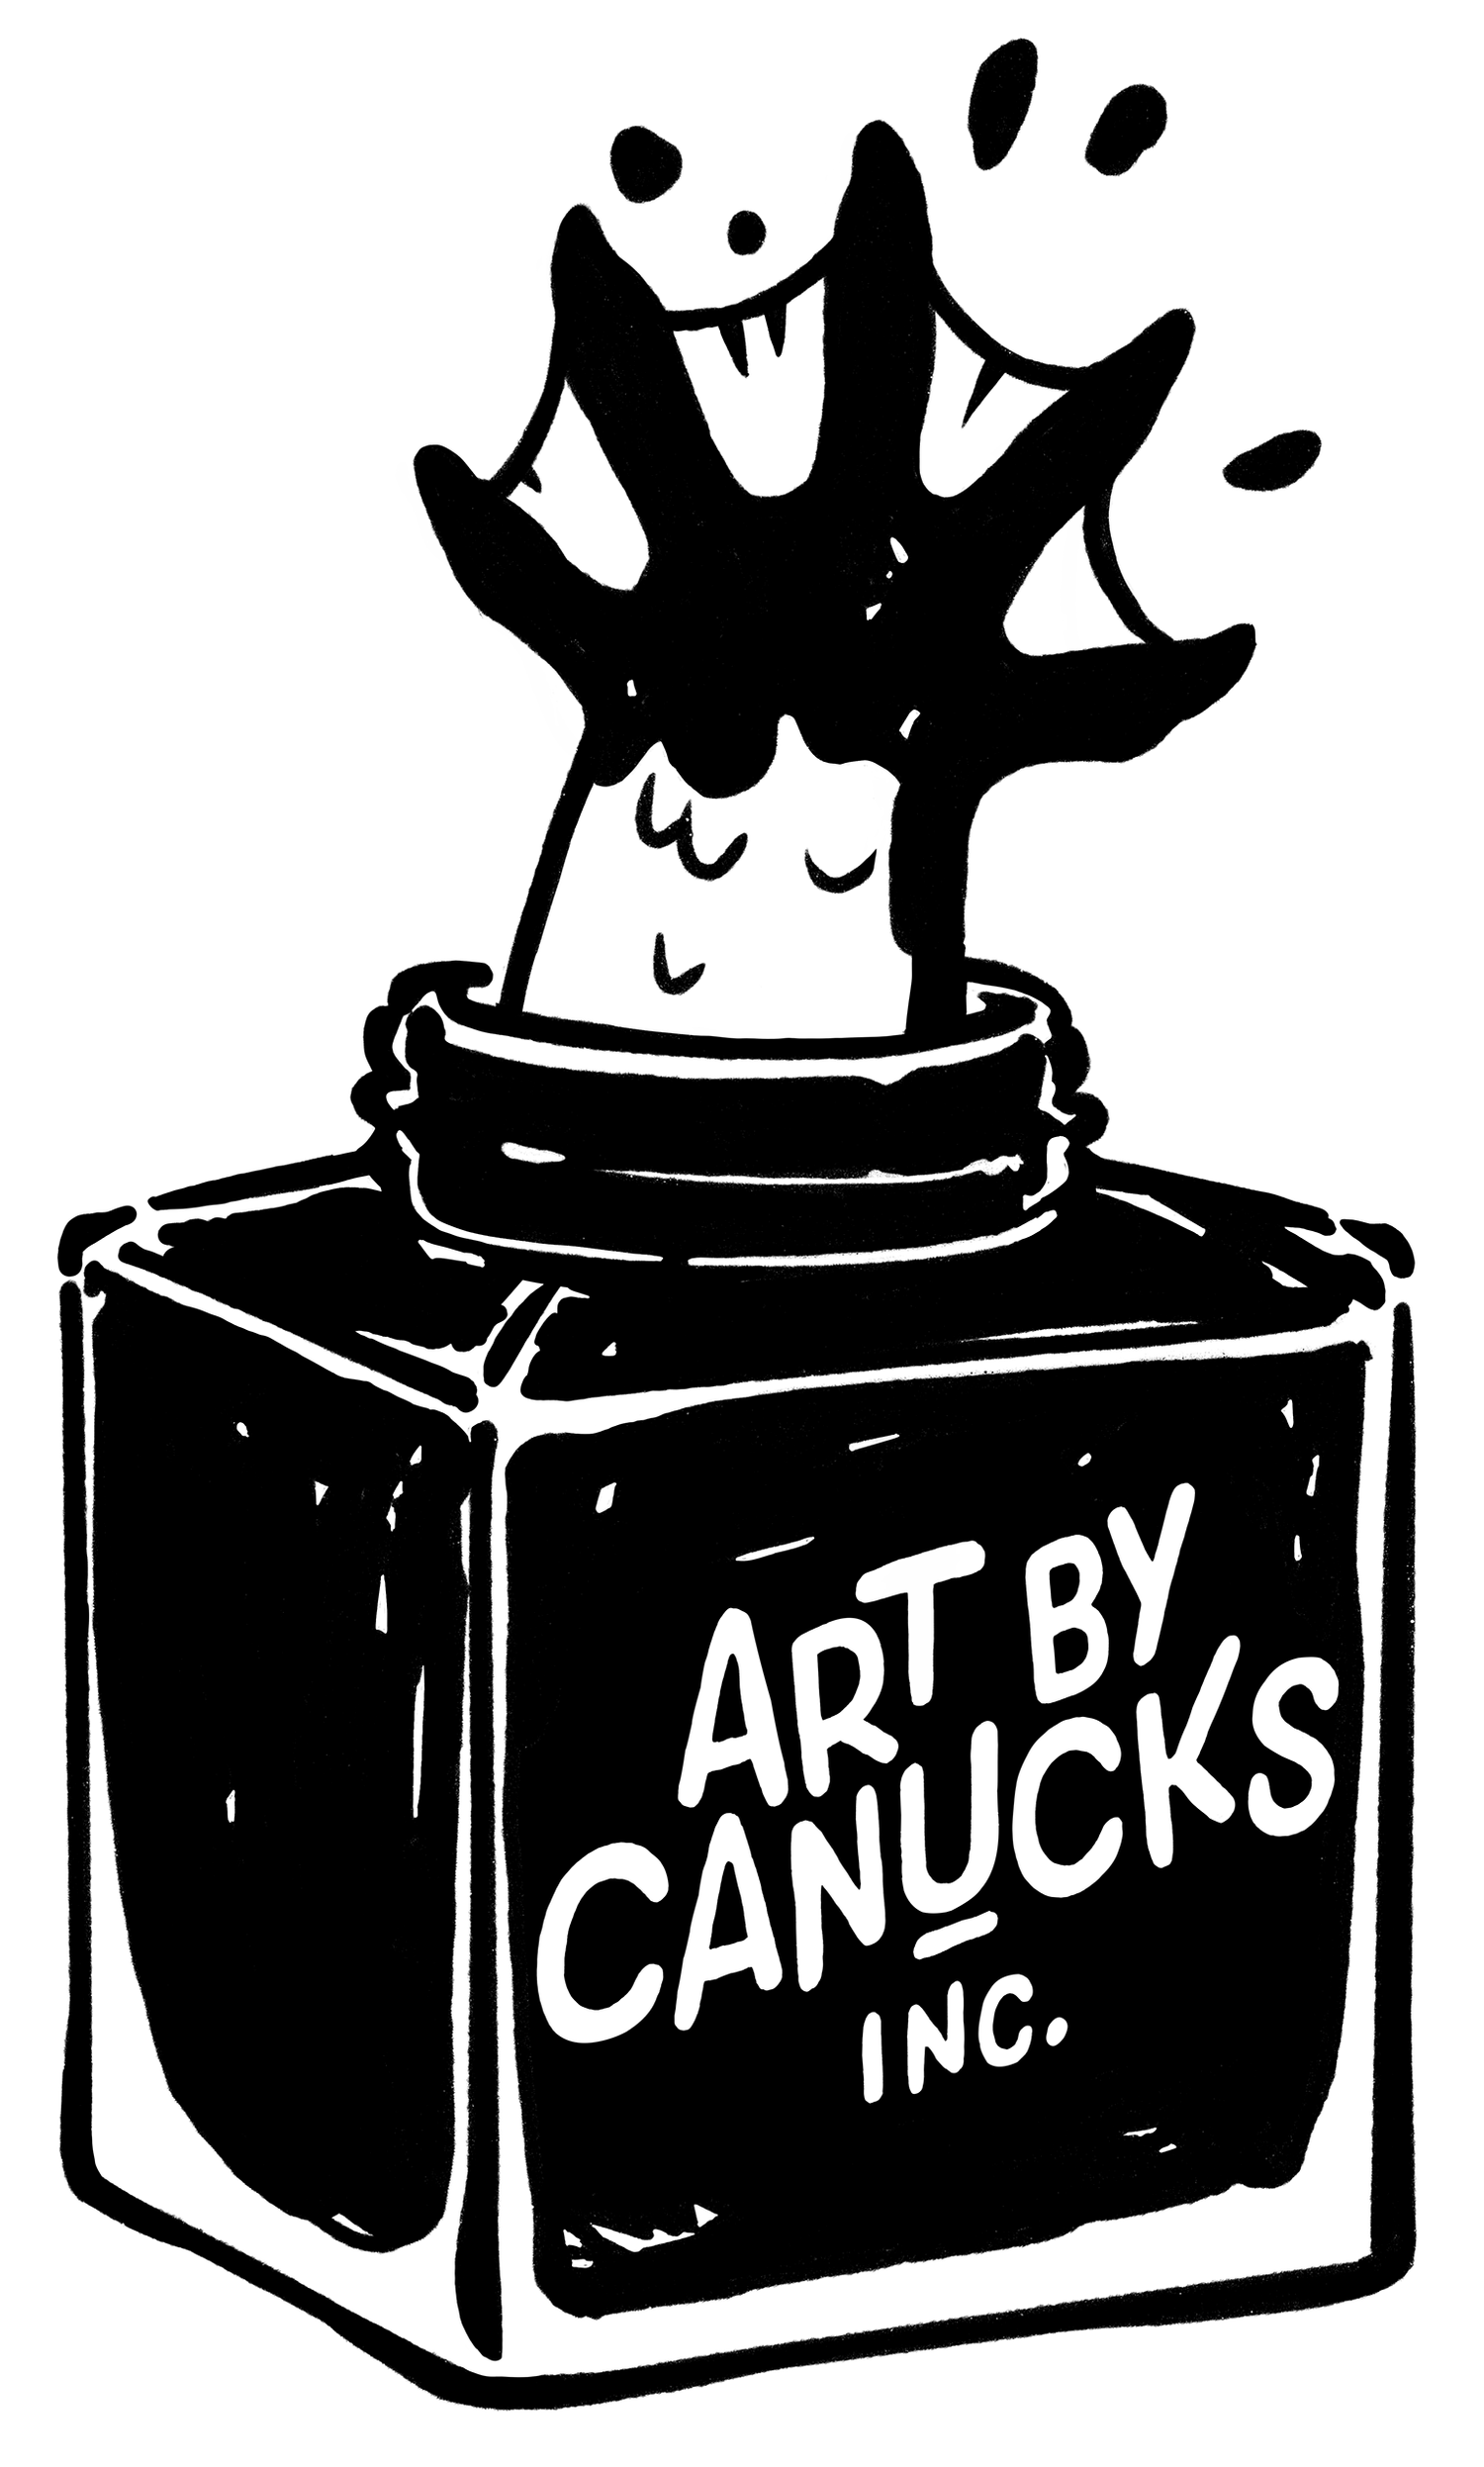 ART BY CANUCKS